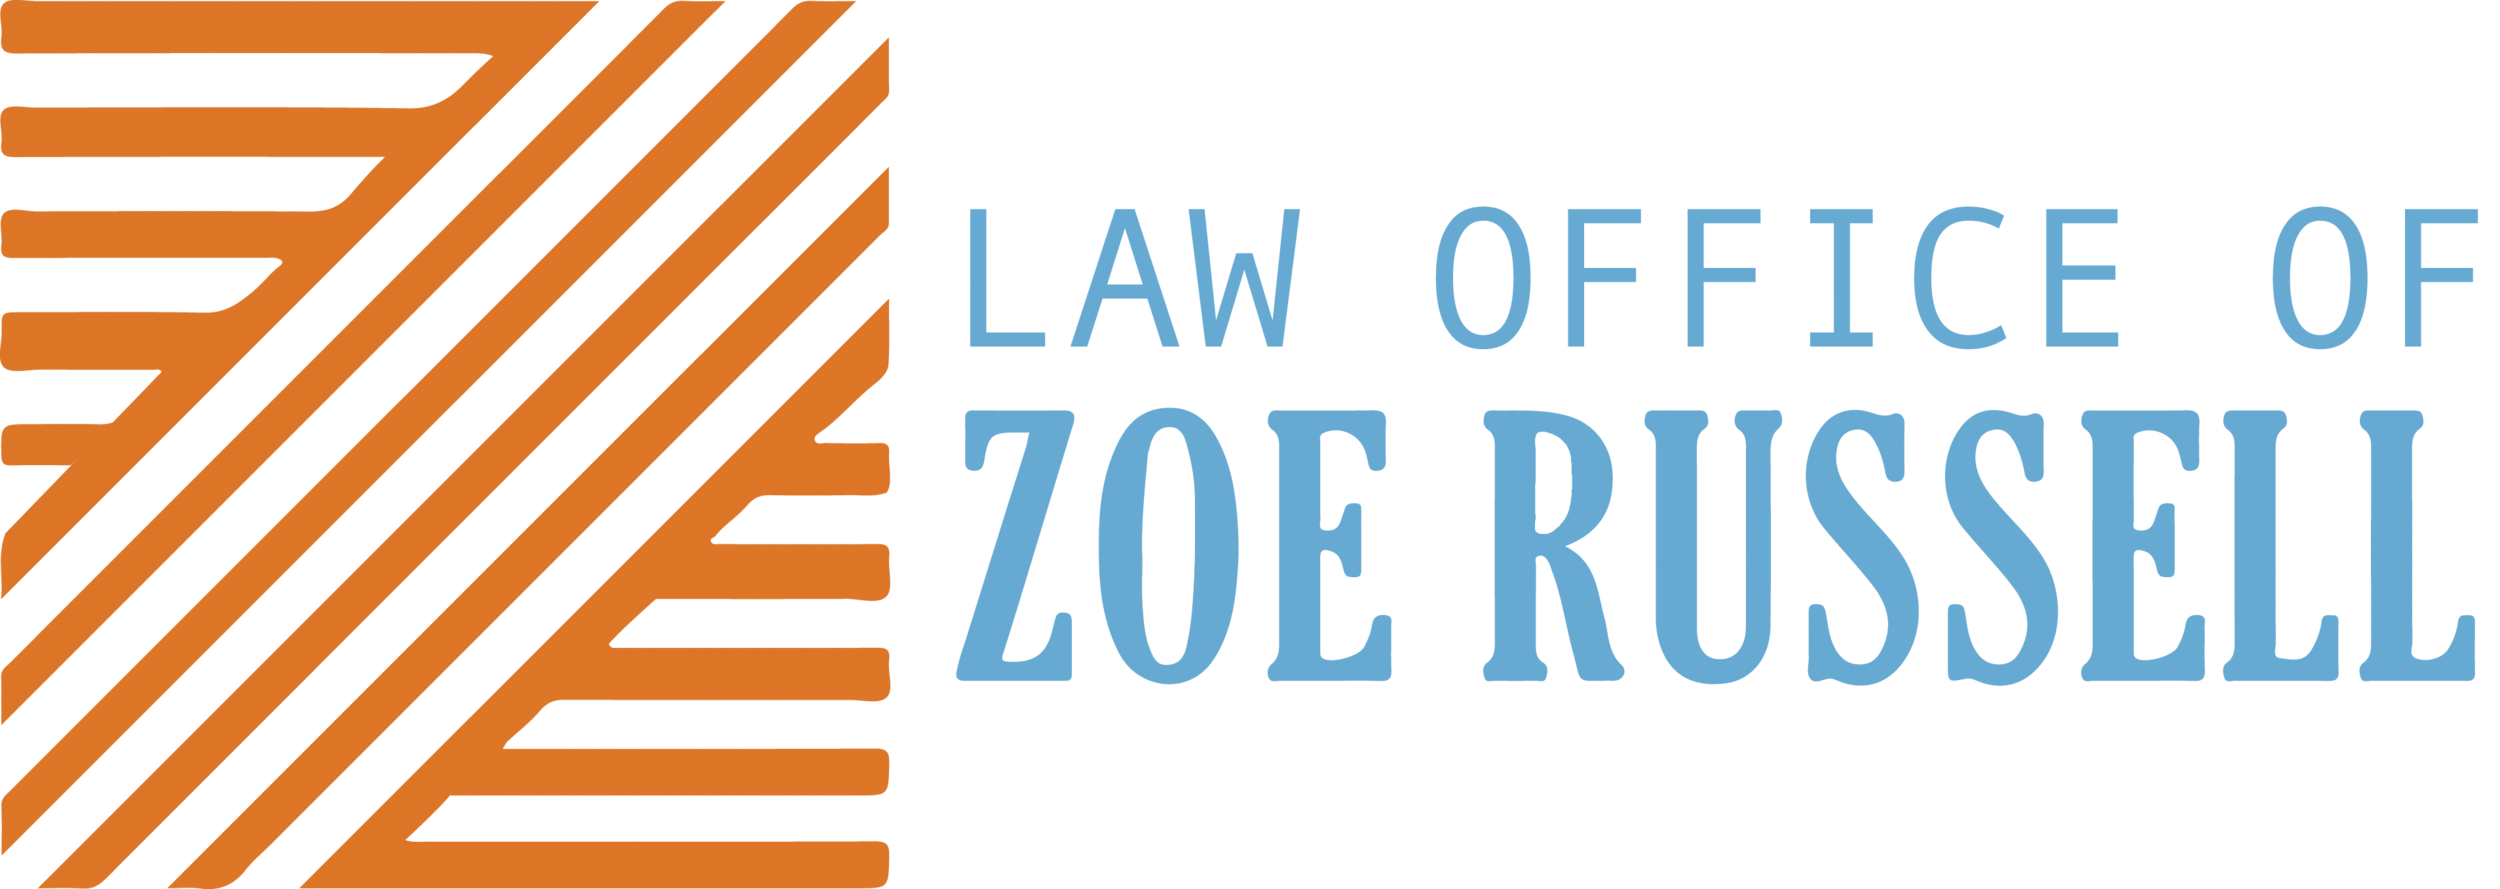 Criminal Defense in San Antonio, Law Office of Zoe Russell, PLLC